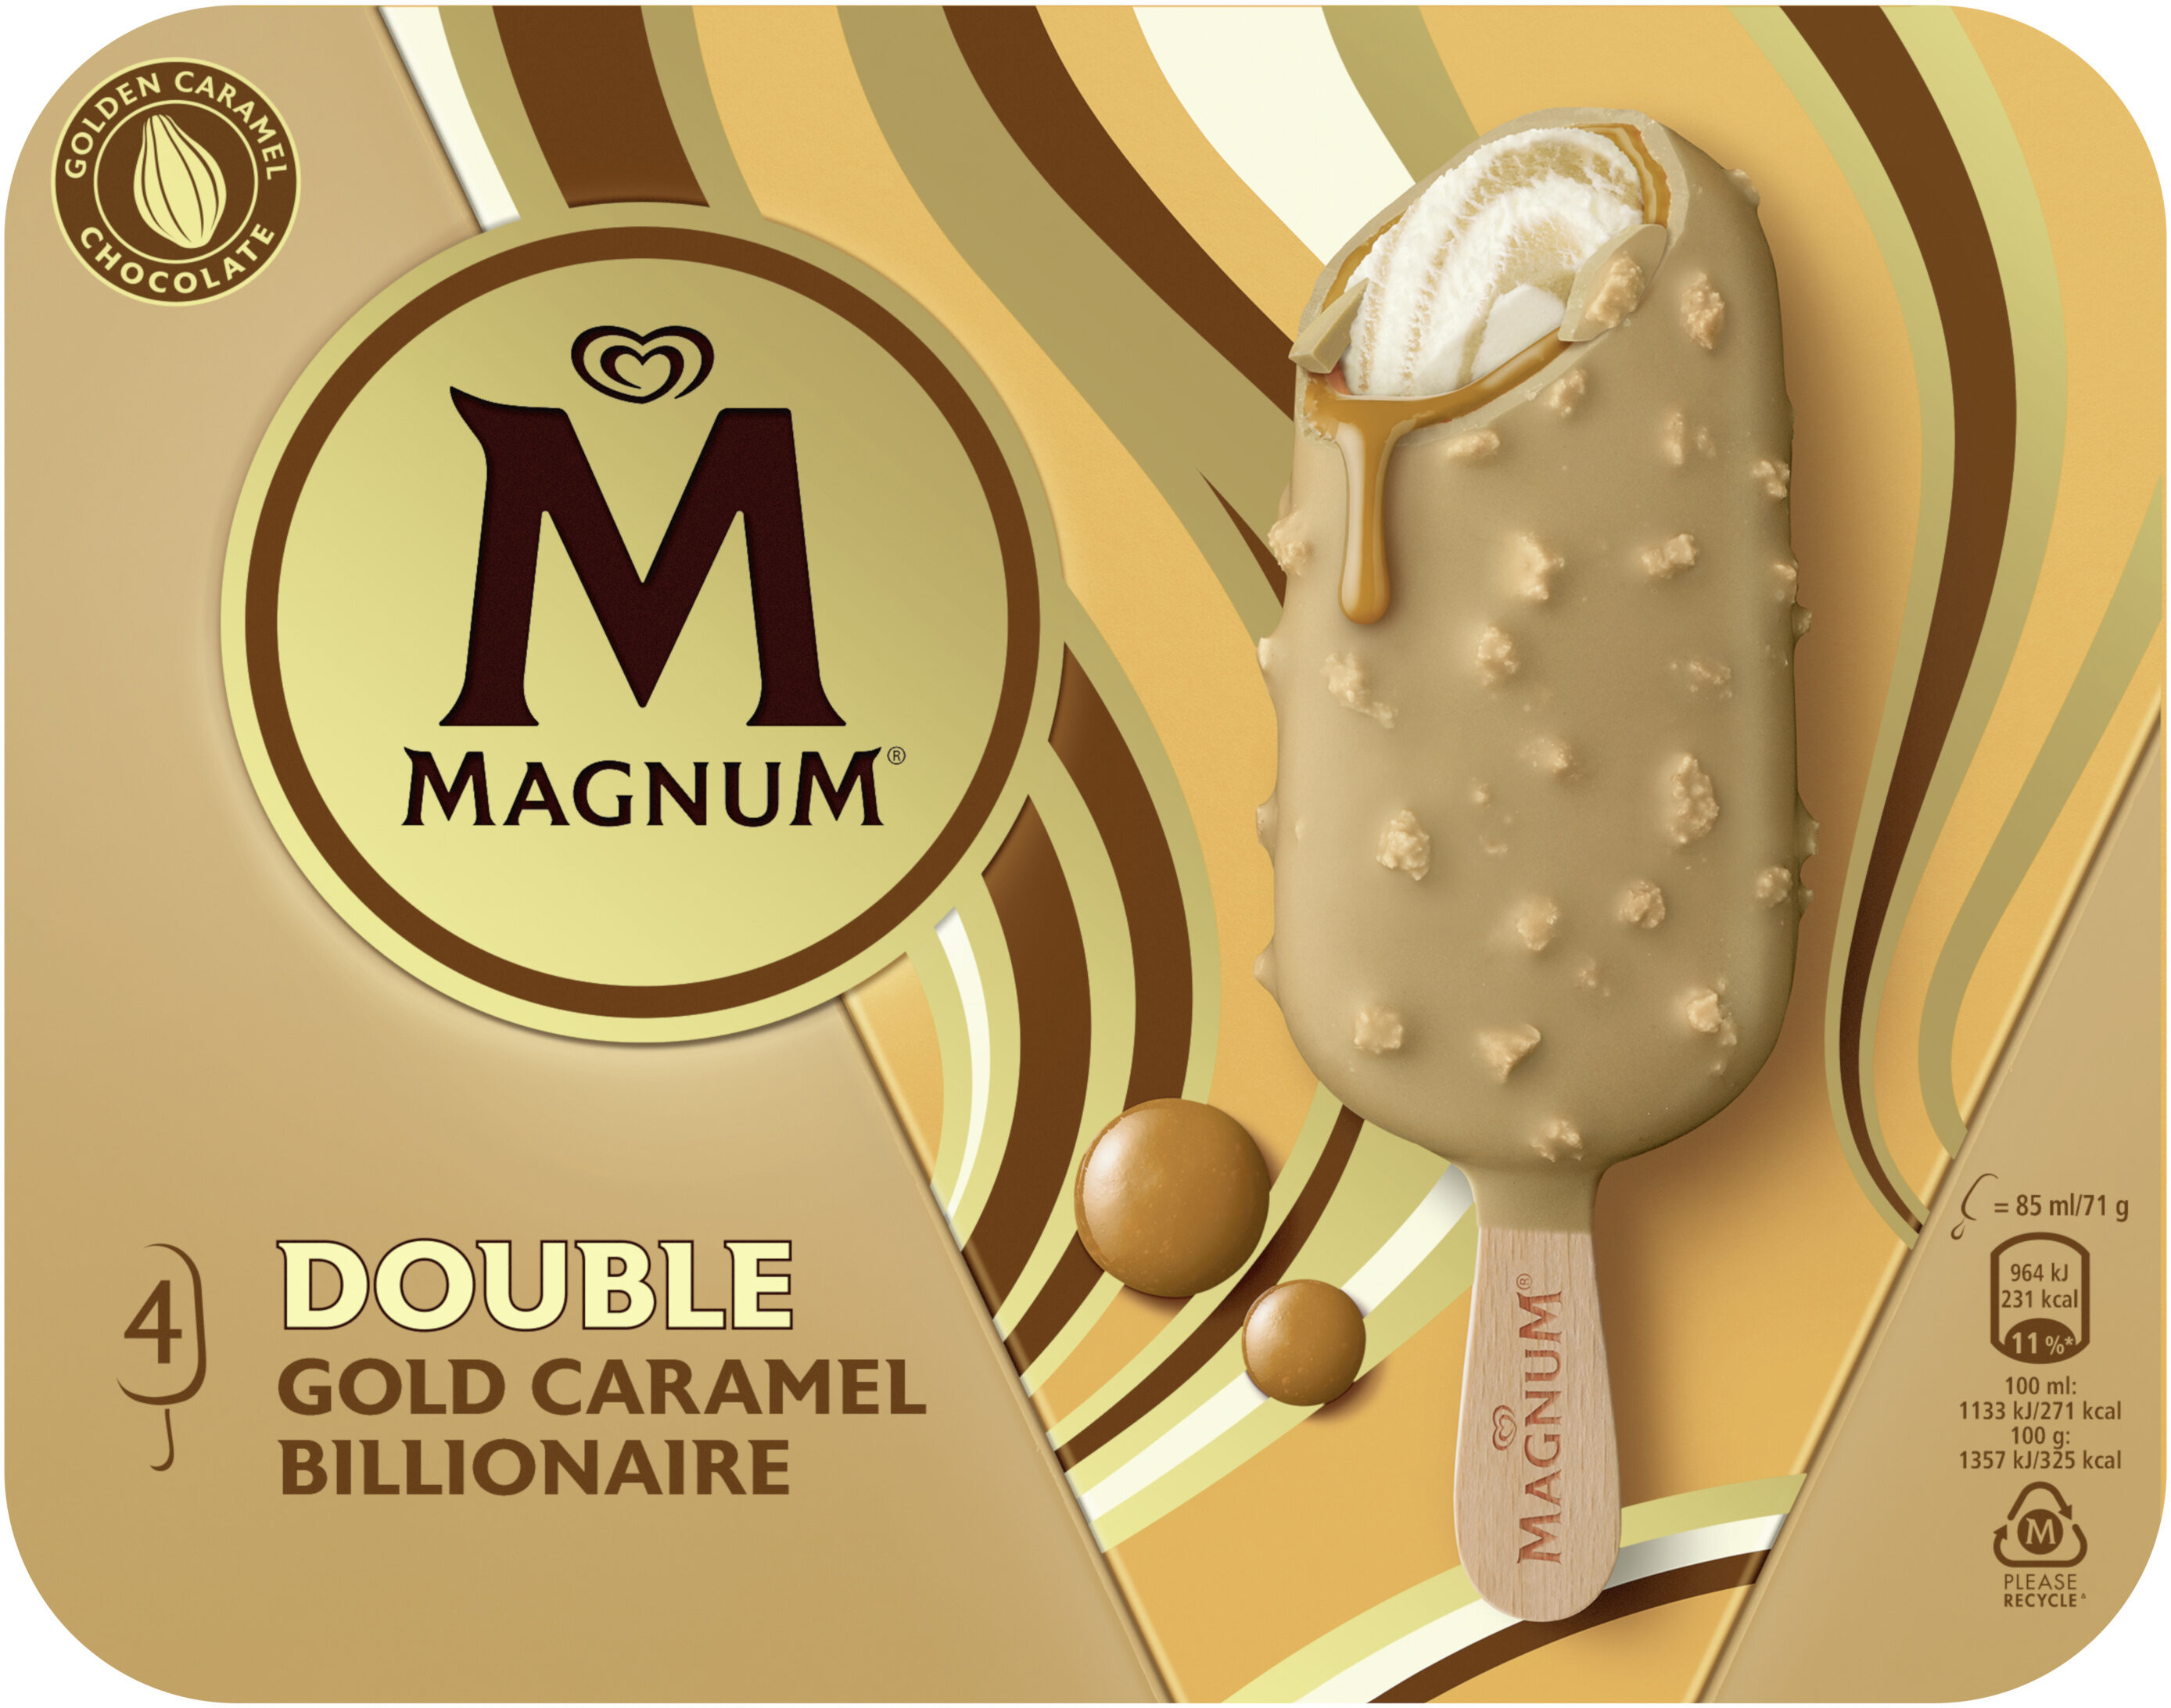 Magnum double gold caramel billionaire - Product - fr. image/svg+xml. ×. 